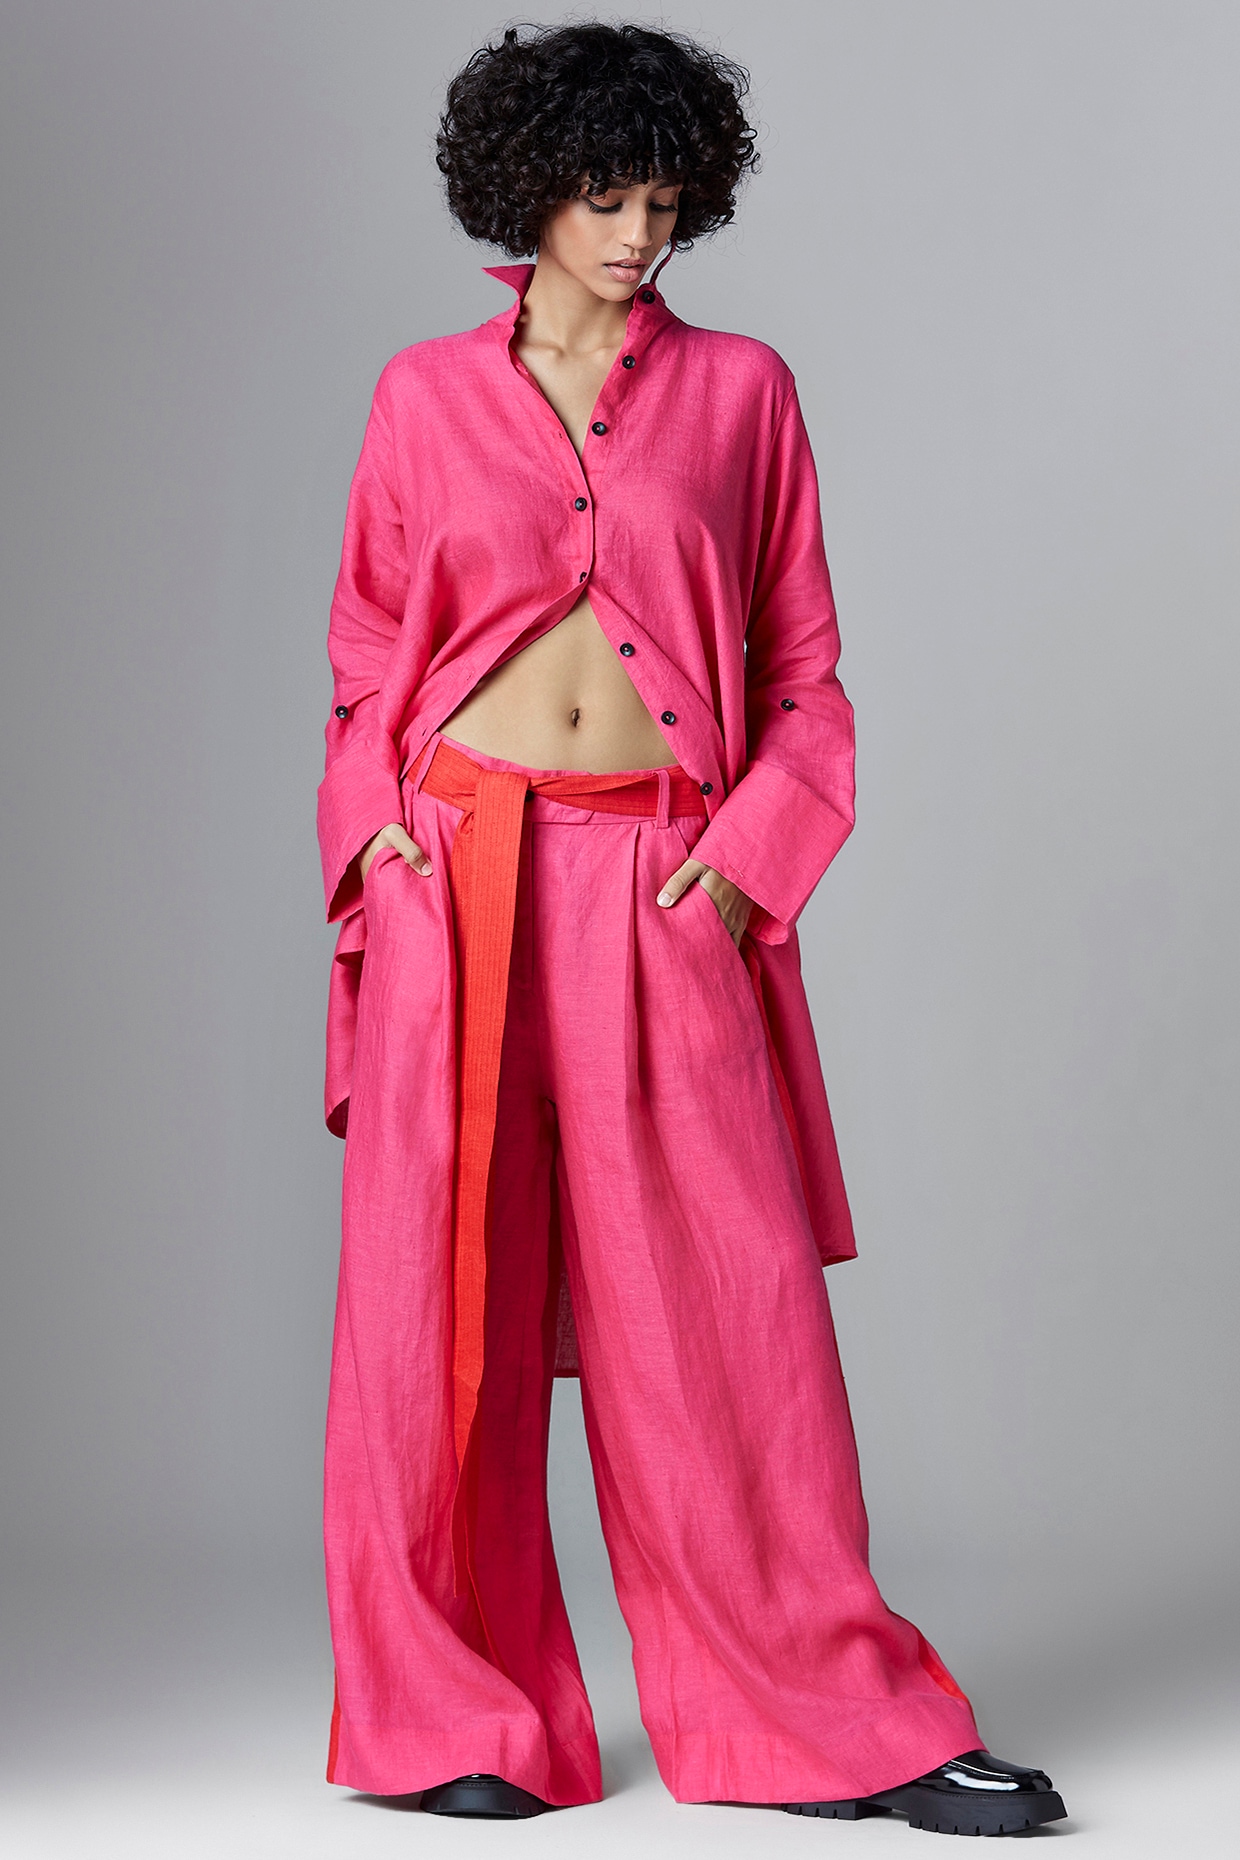 Rangmanch by Pantaloons Pink Embroidered Kurti Palazzo Set With Dupatta